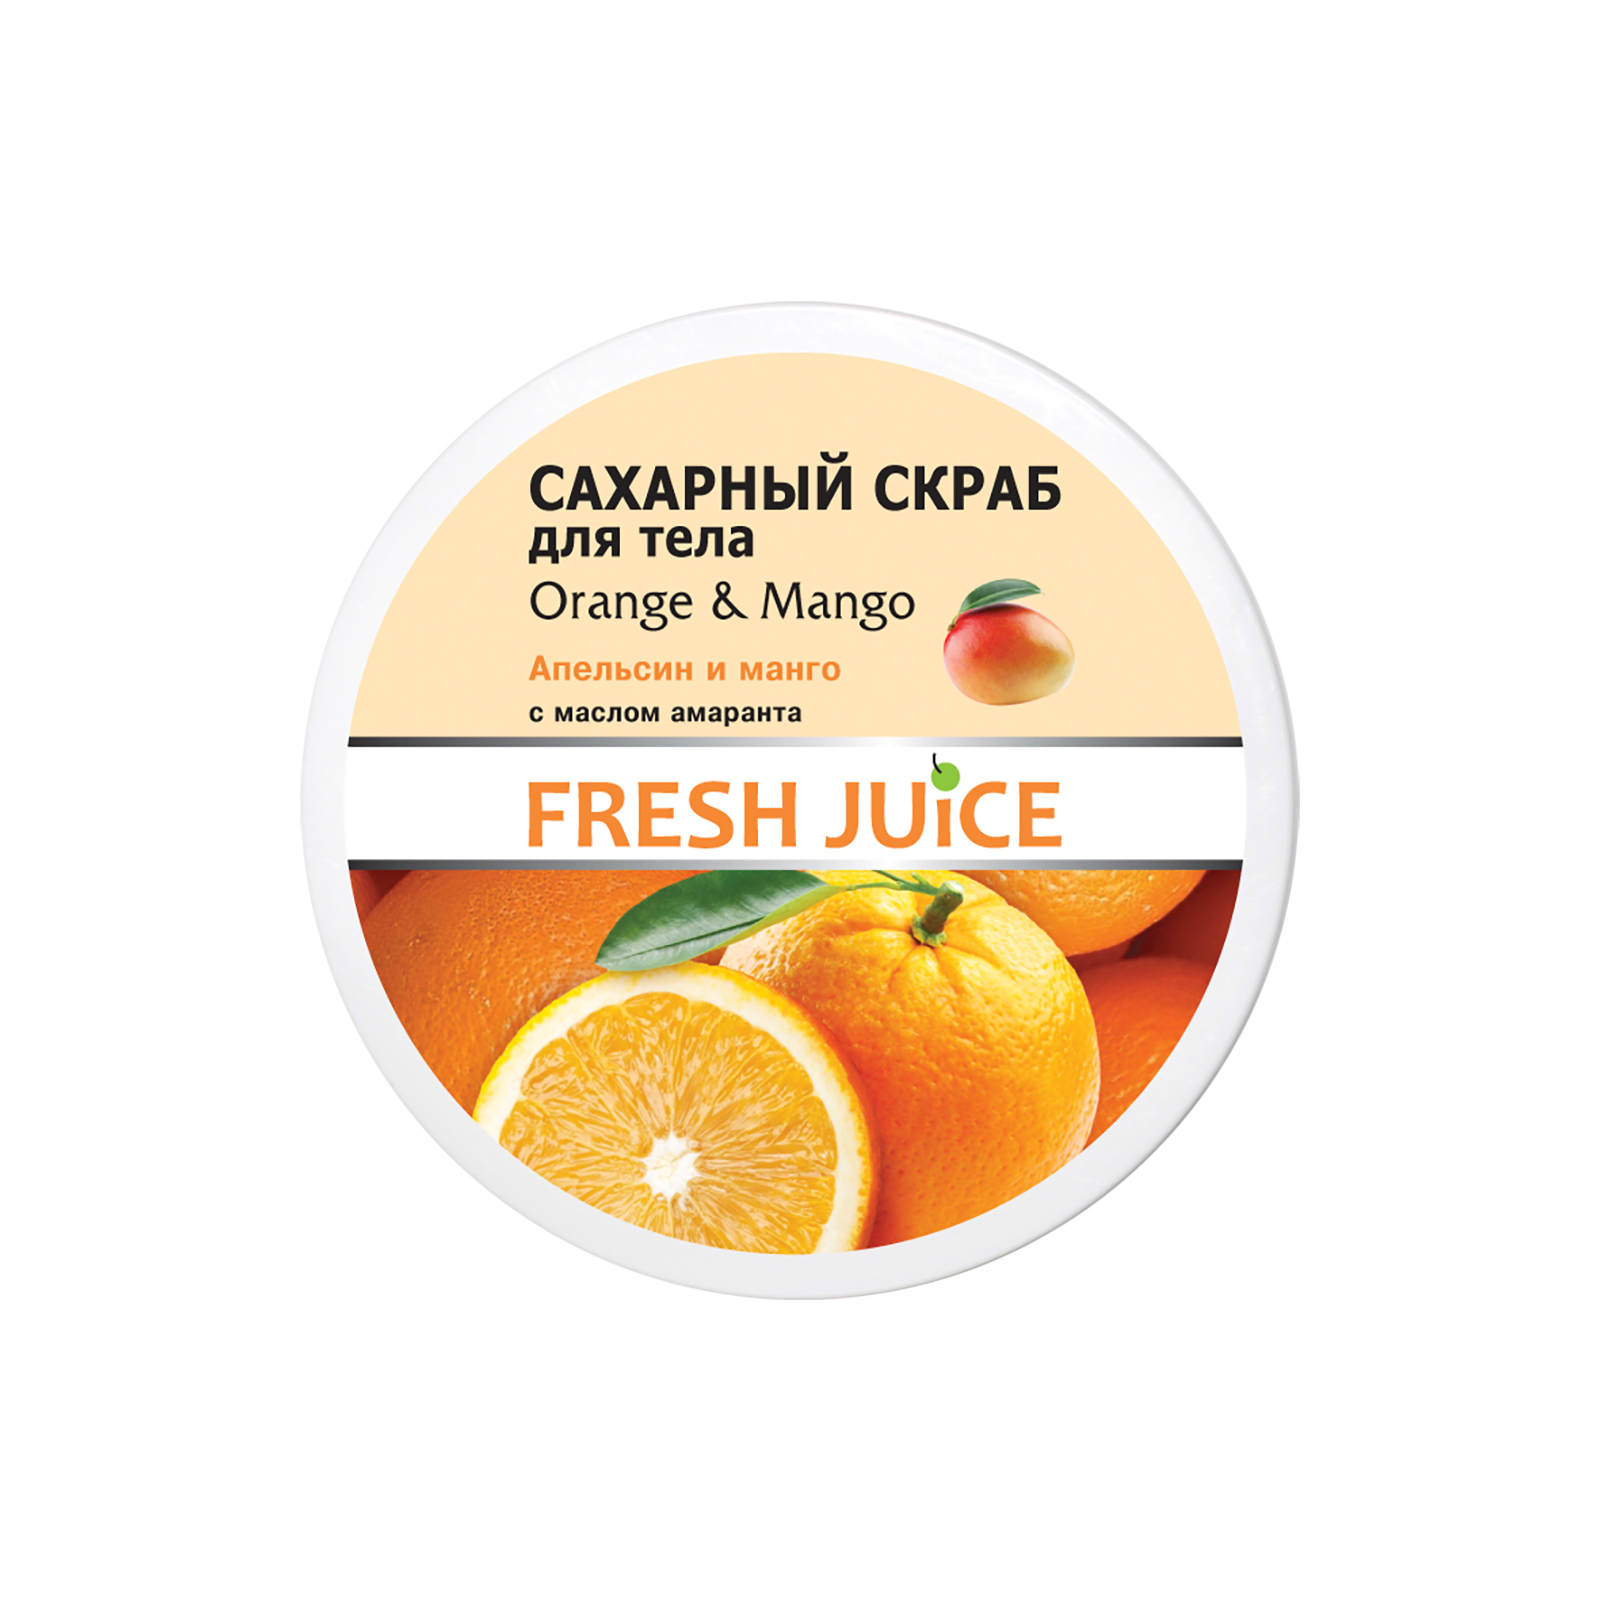 Скраб для тела Fresh Juice Orange & Mango сахарный 225 мл (4823015925771)